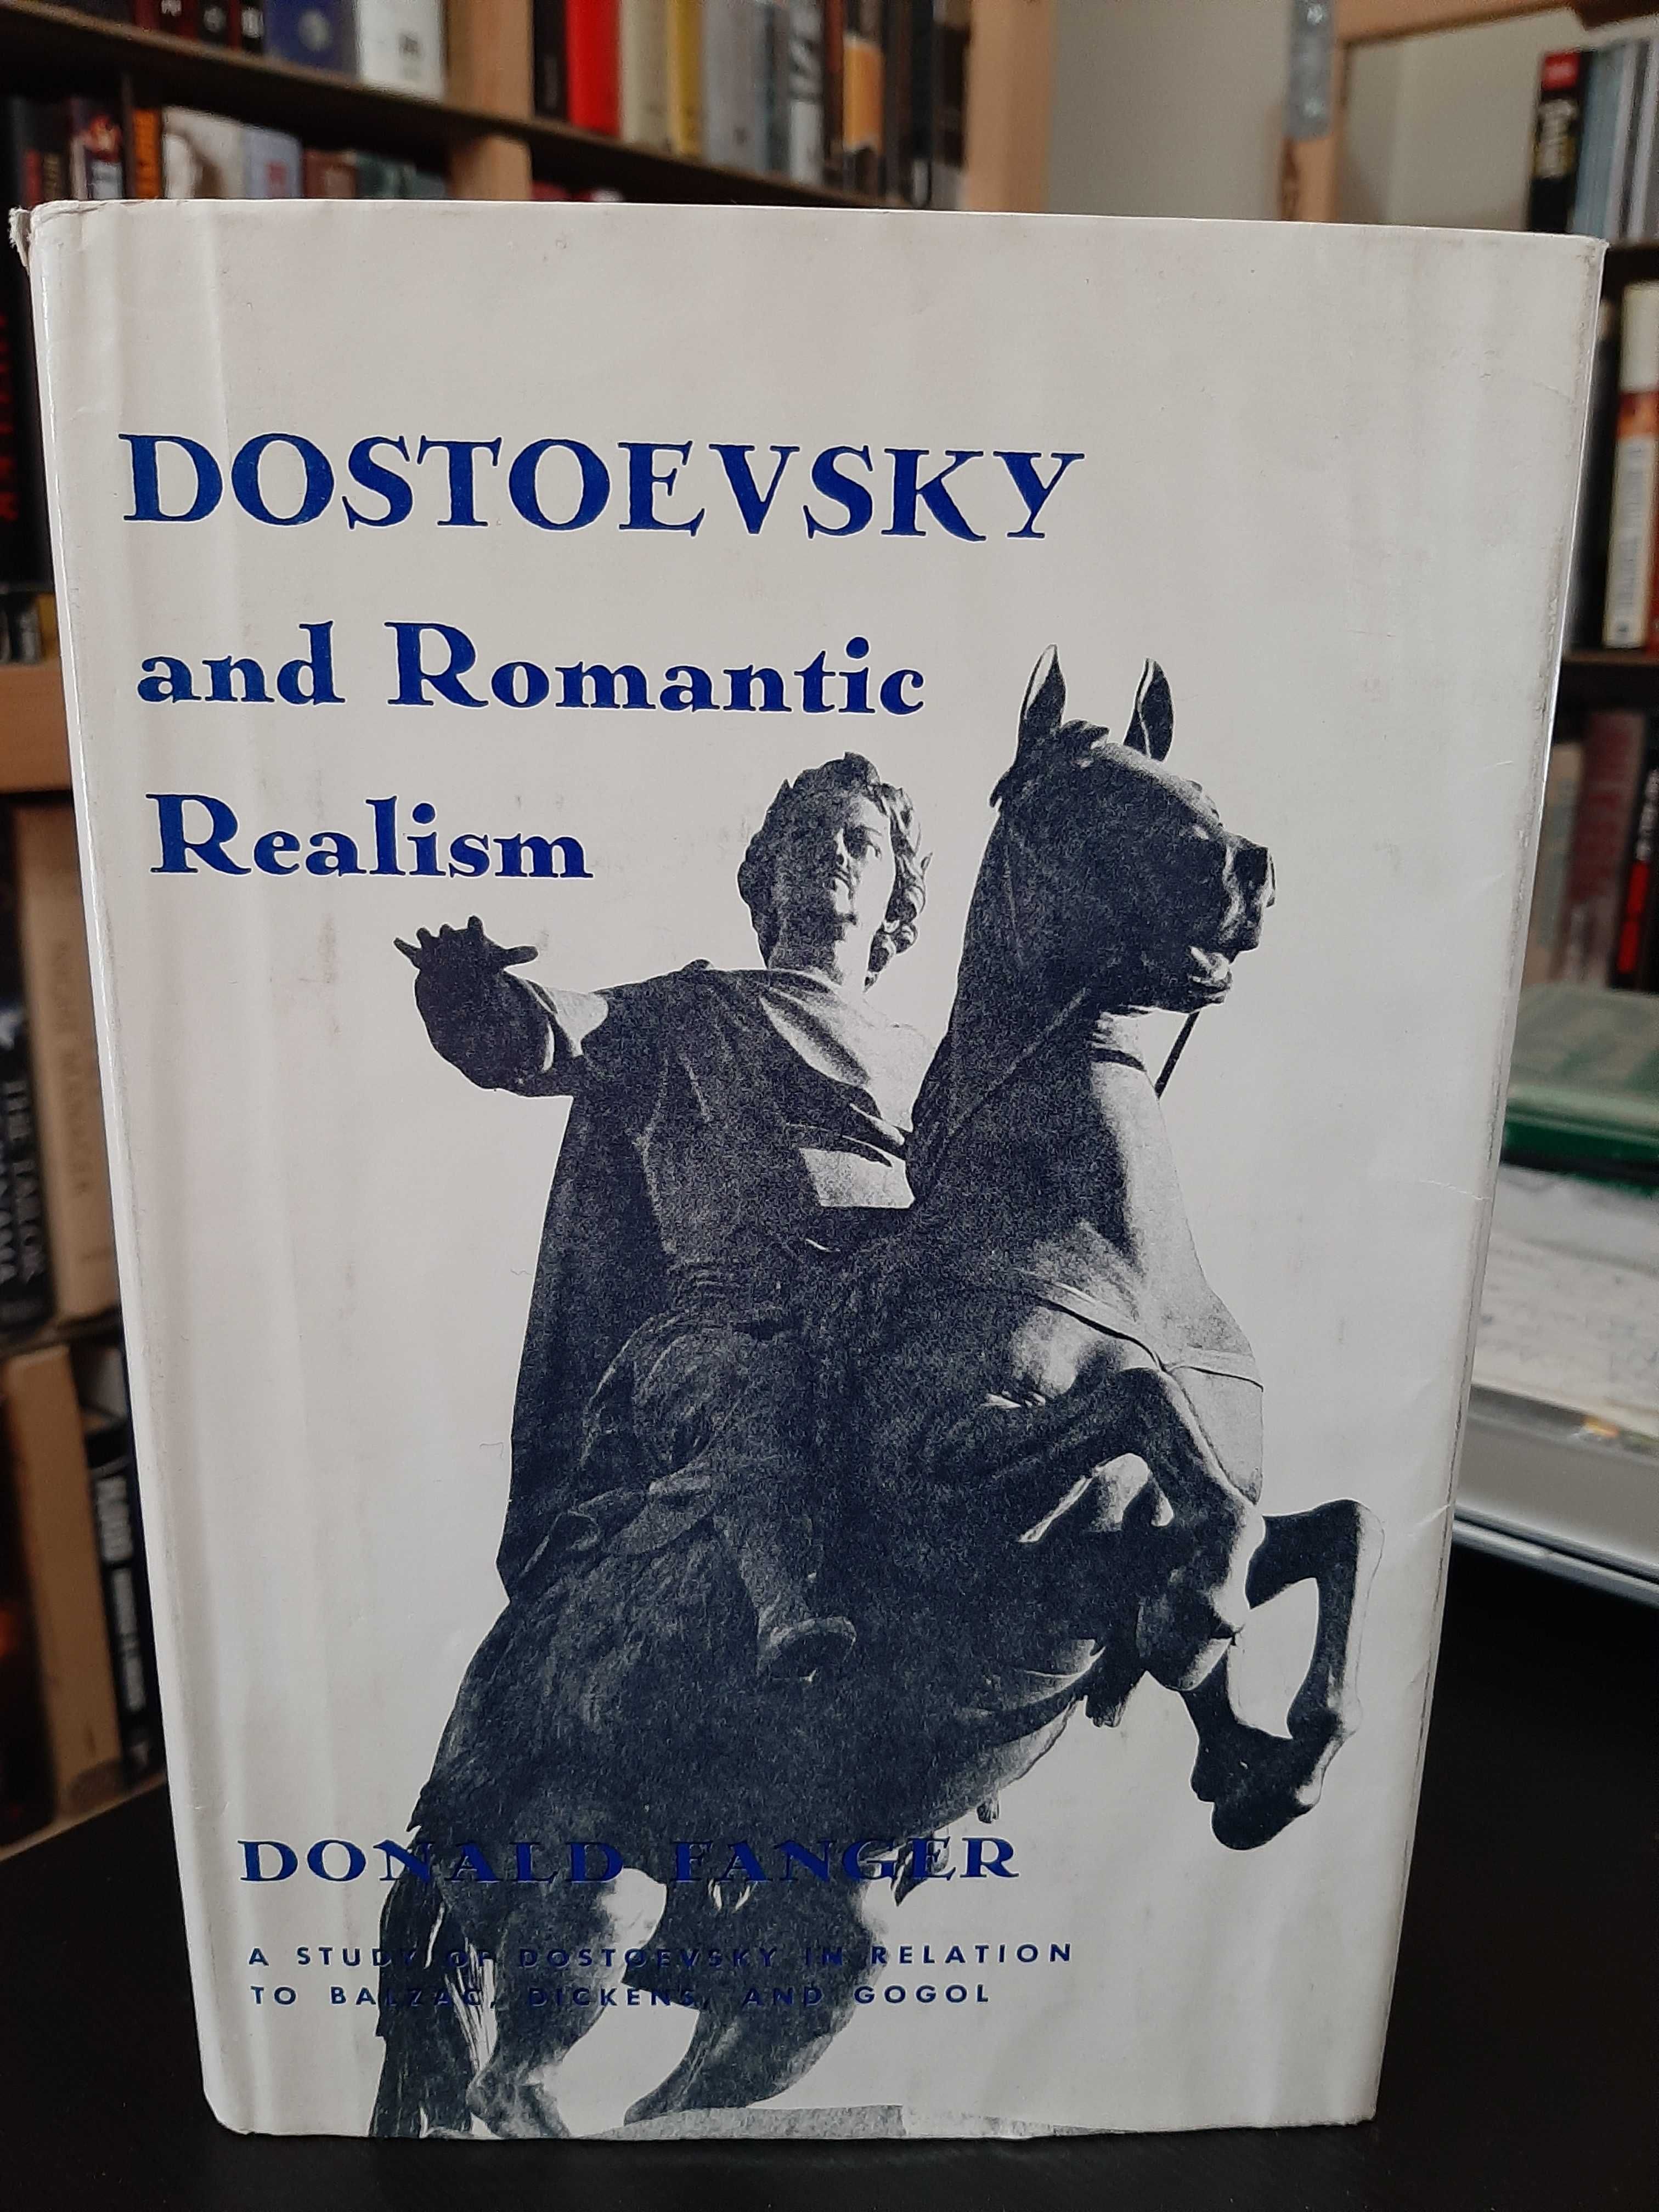 Donald Fanger: Dostoevsky and Romantic Realism: Dickens, Balzac, Gogol